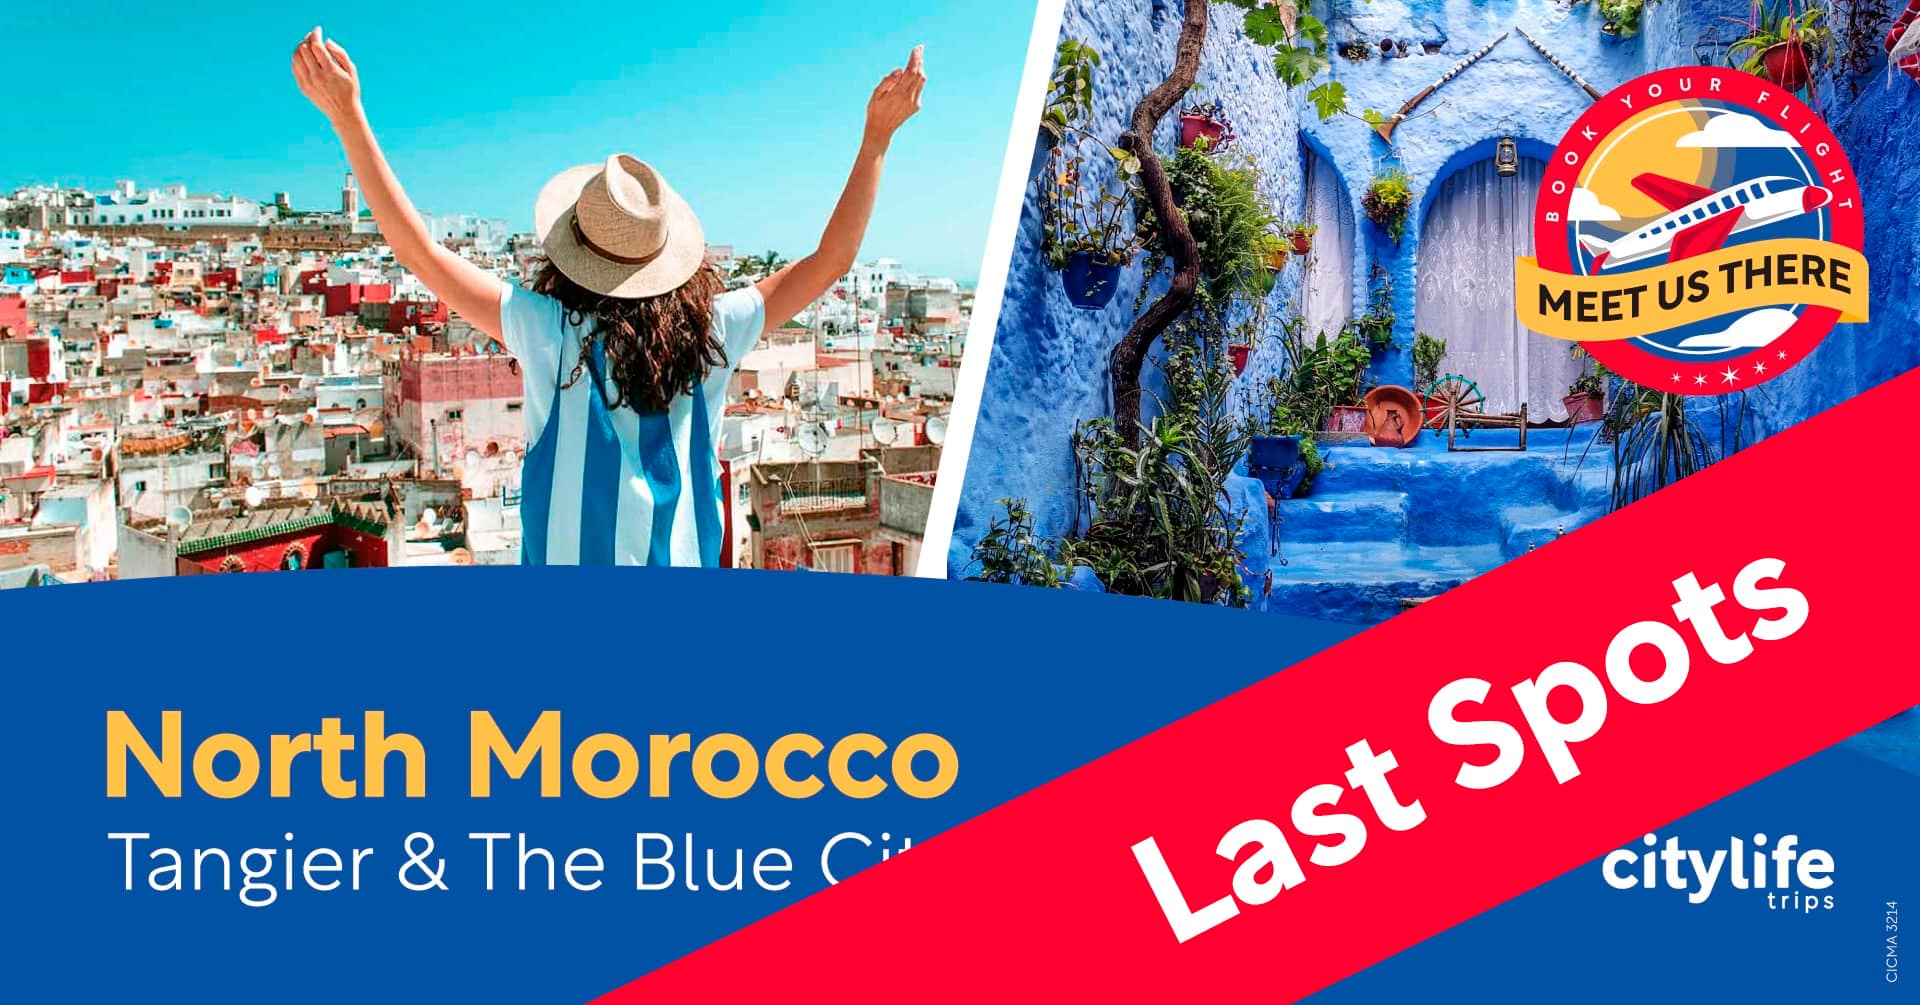 last-spots-north-morocco